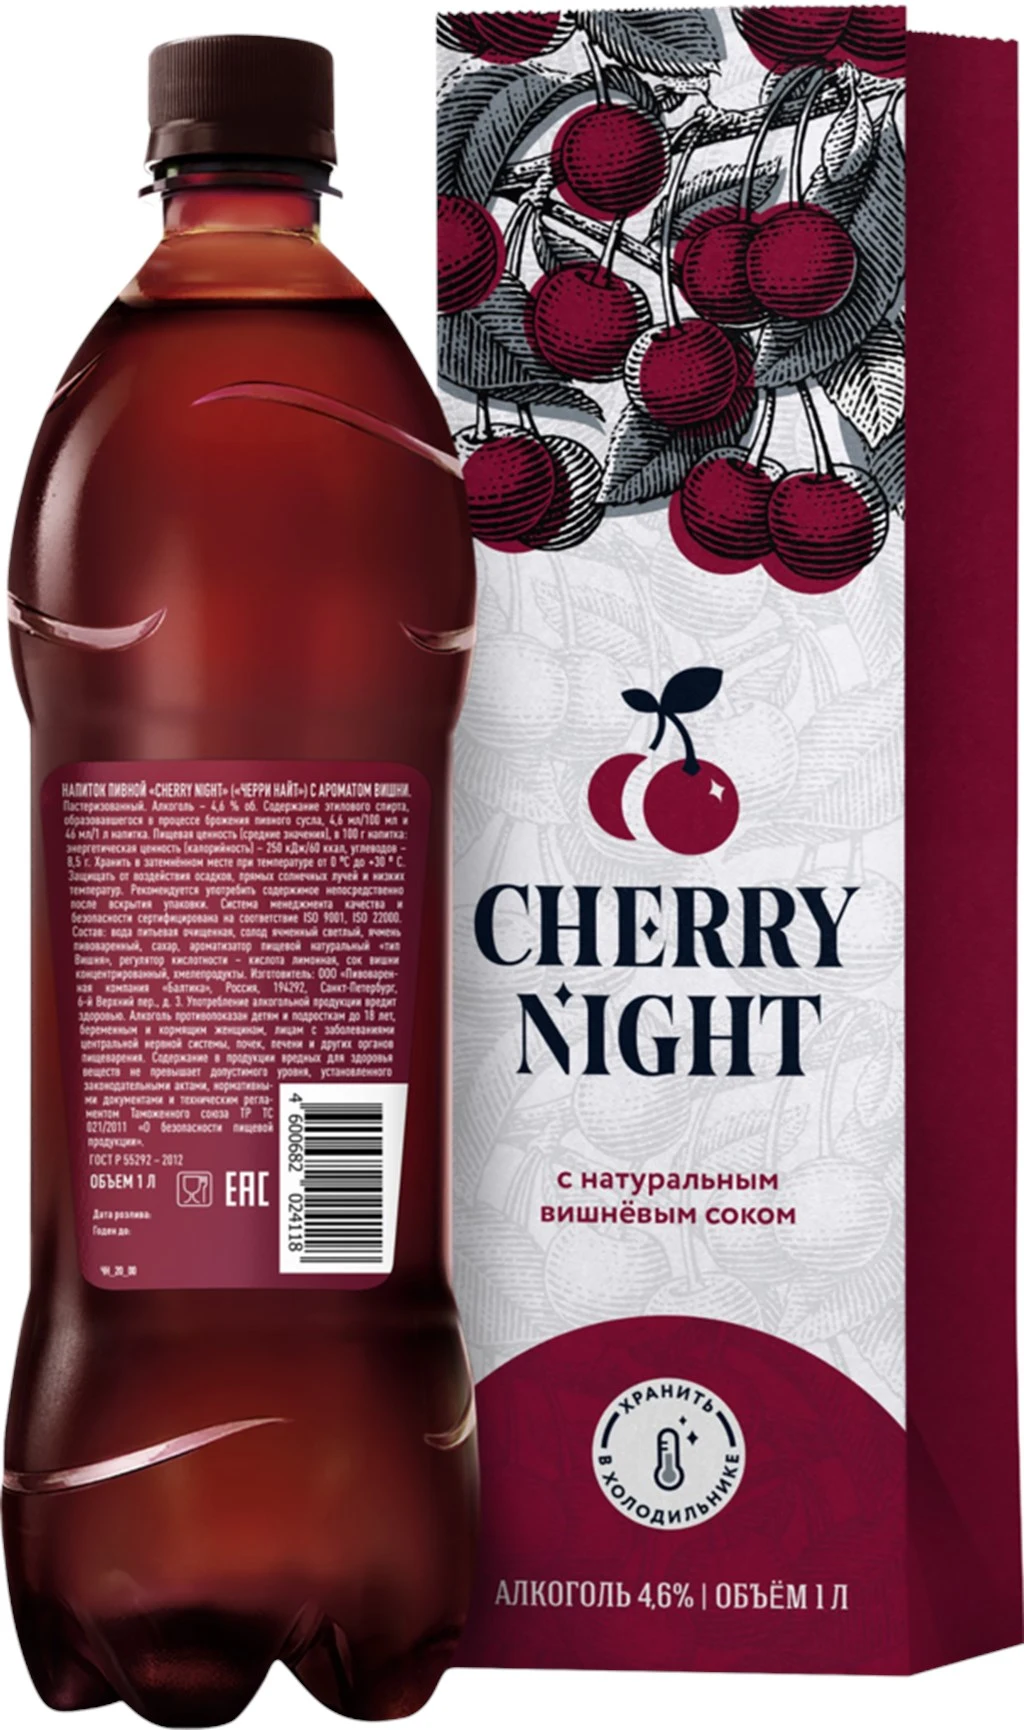 Cherry nvg